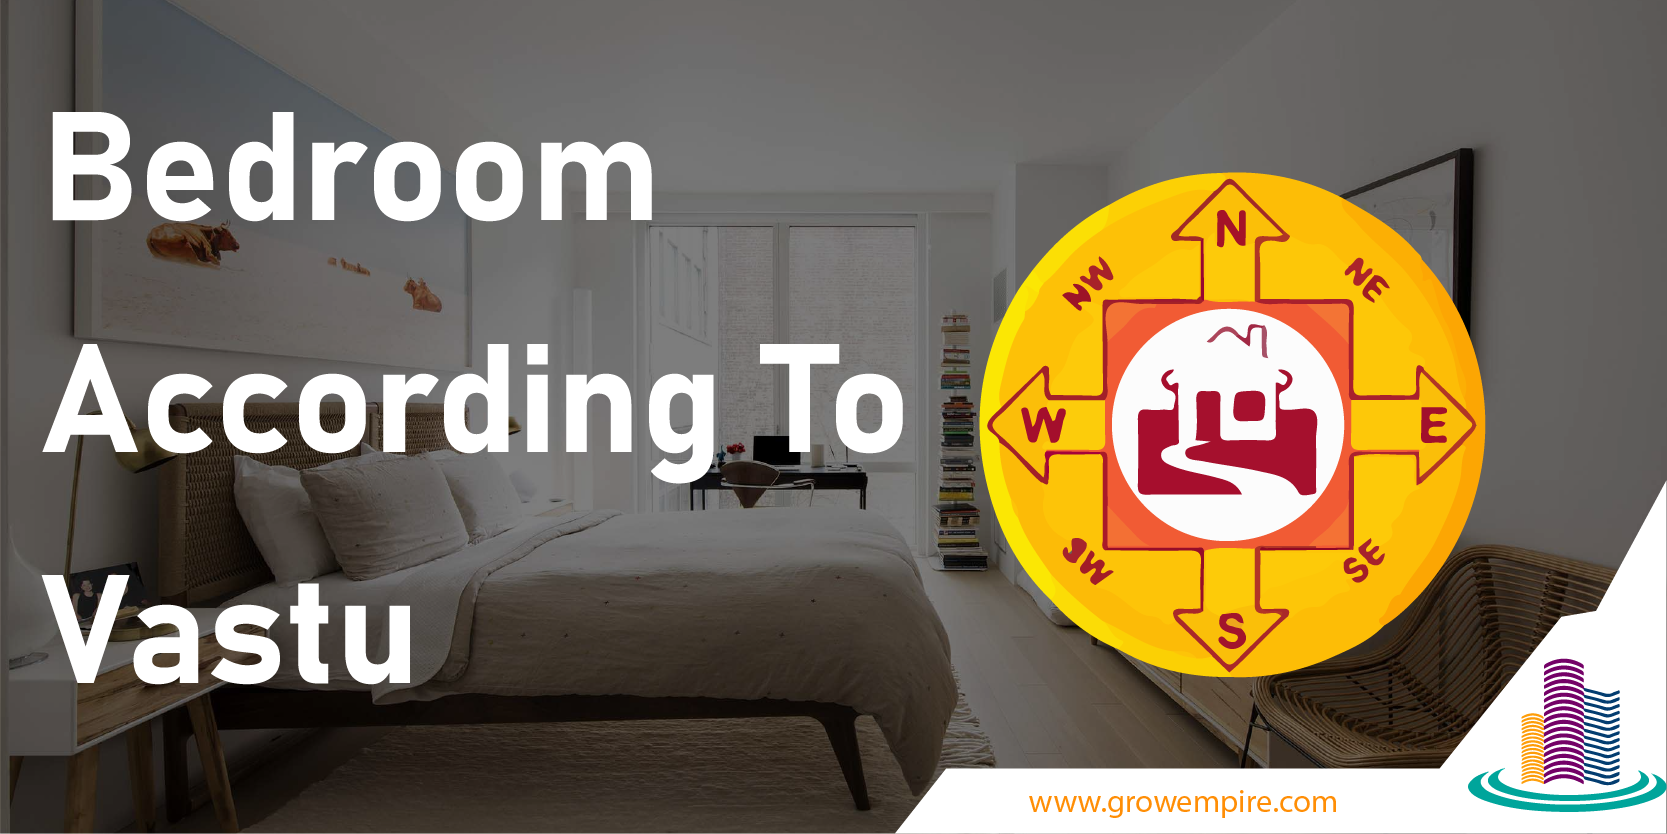 Vastu tips for your master bedroom at home.